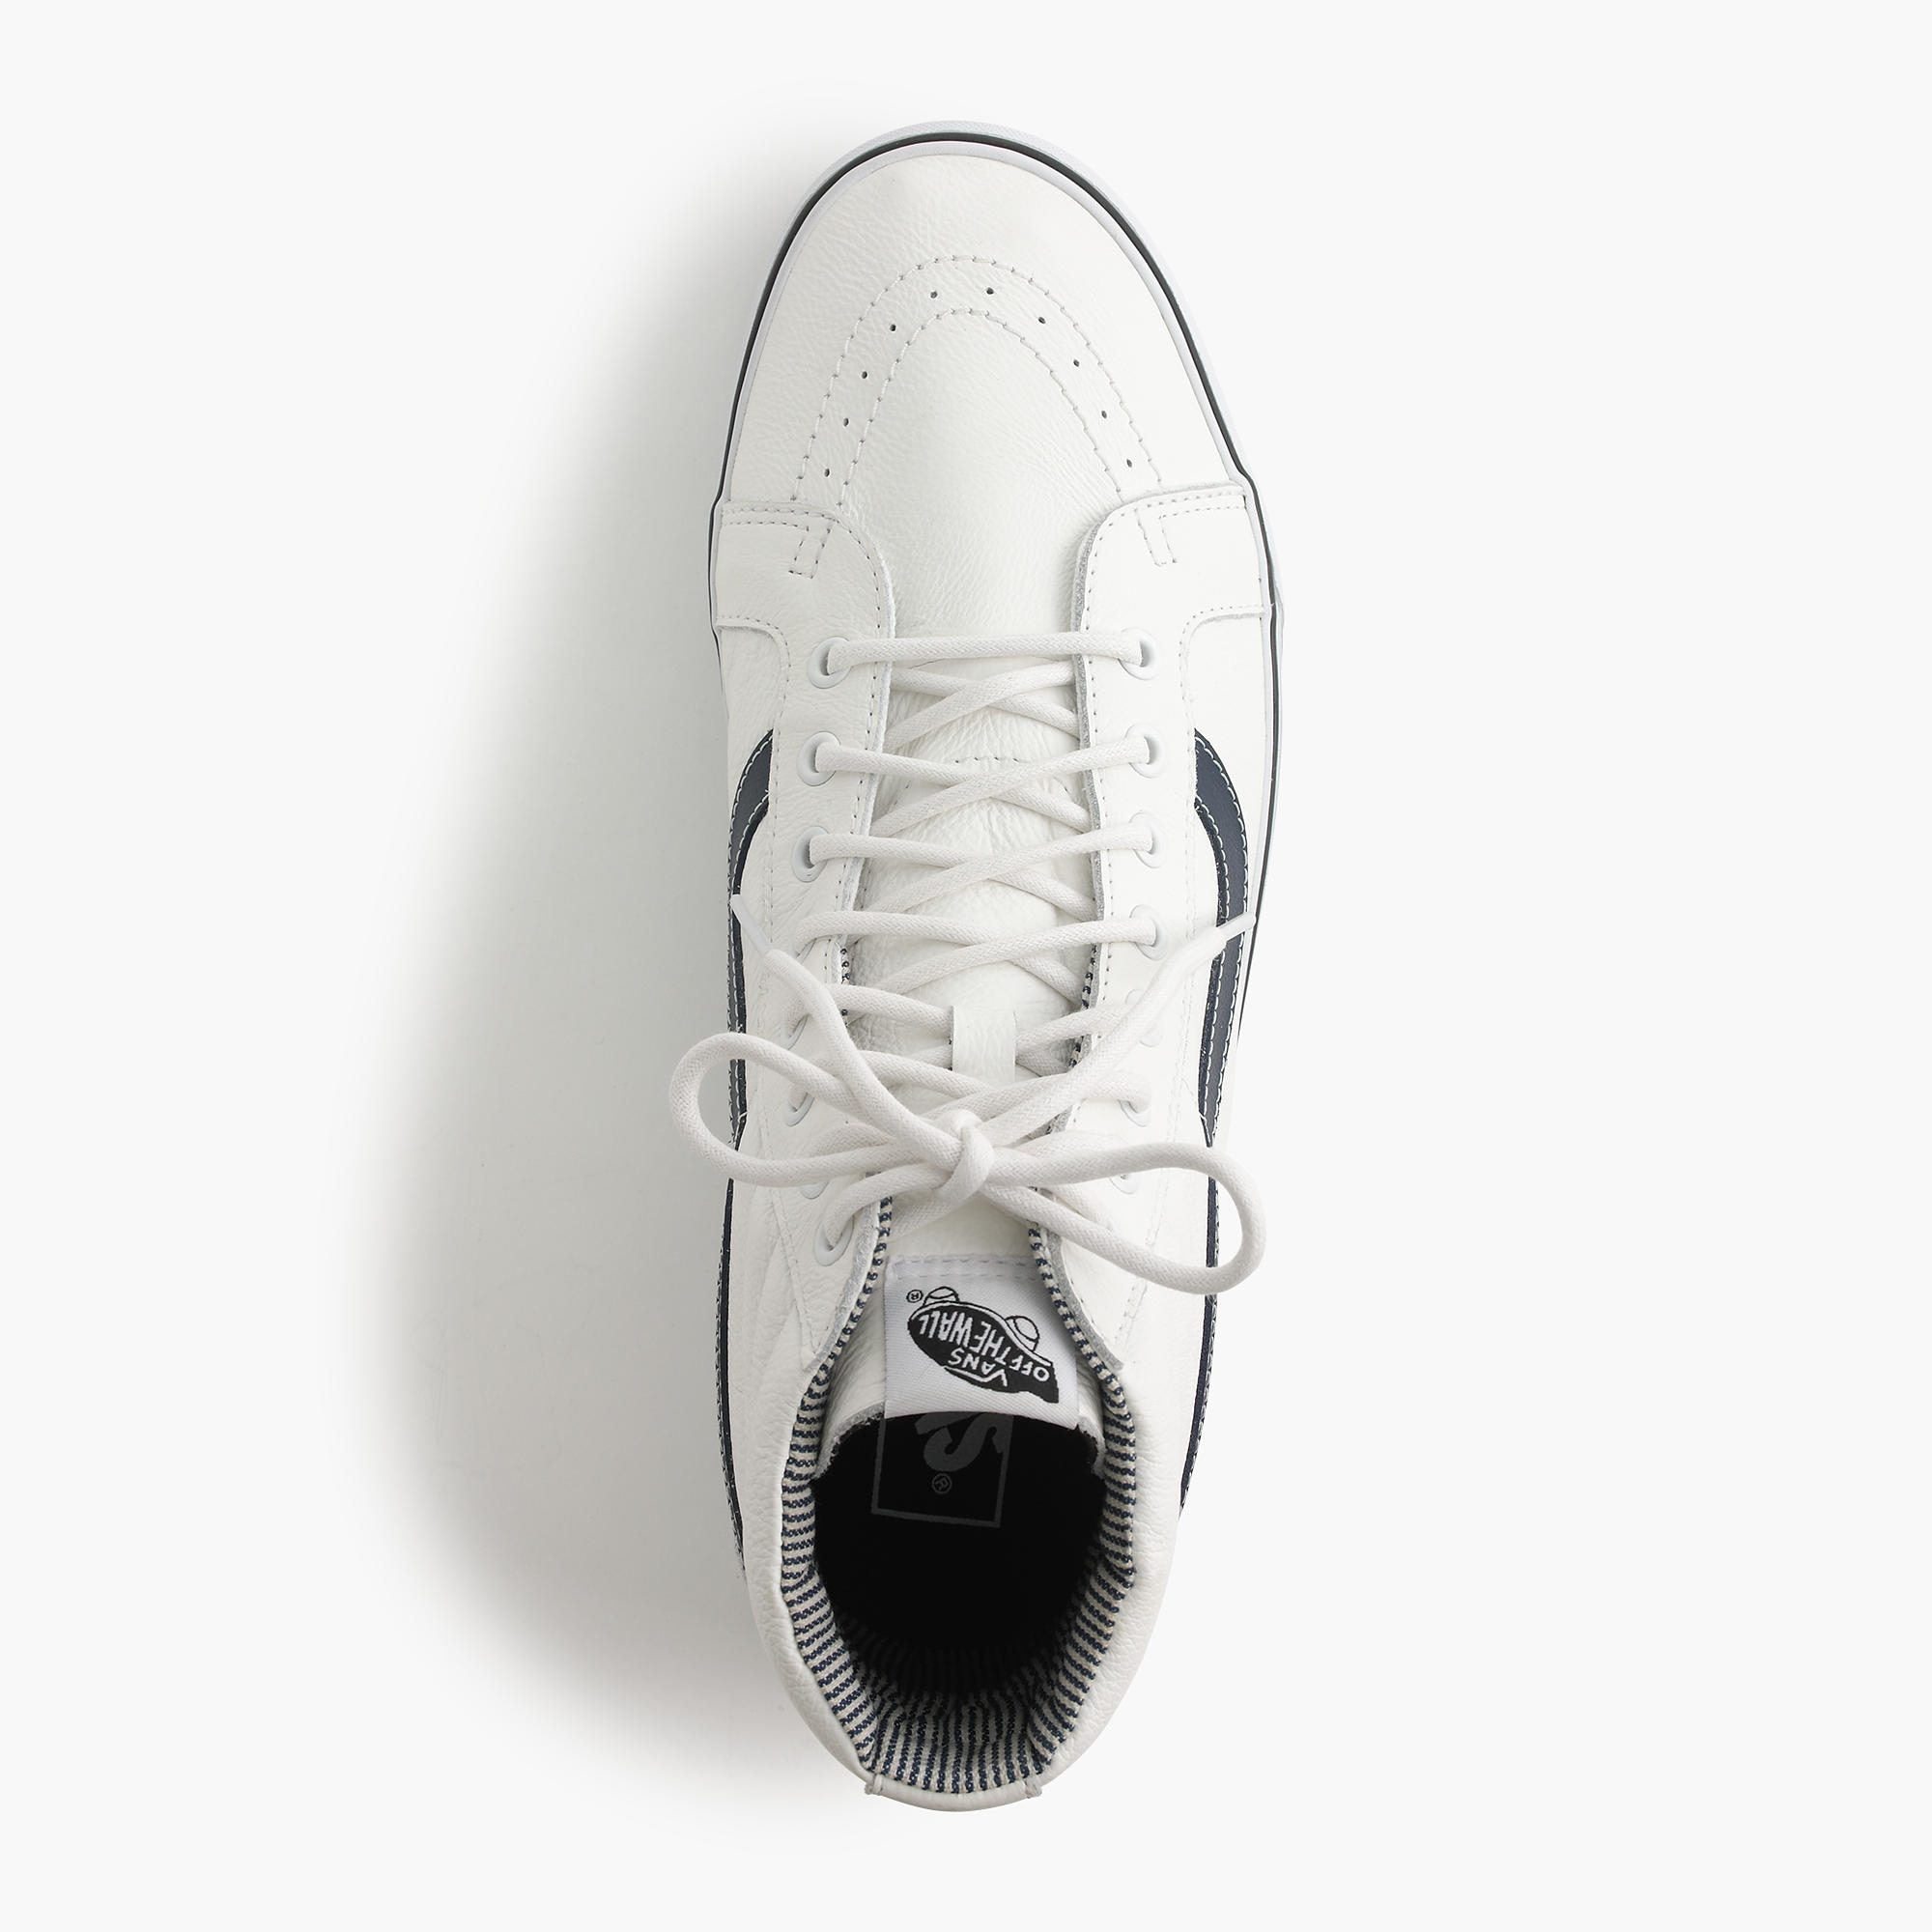 J.Crew Vans Sk8-hi Leather Sneakers in White for Men - Lyst